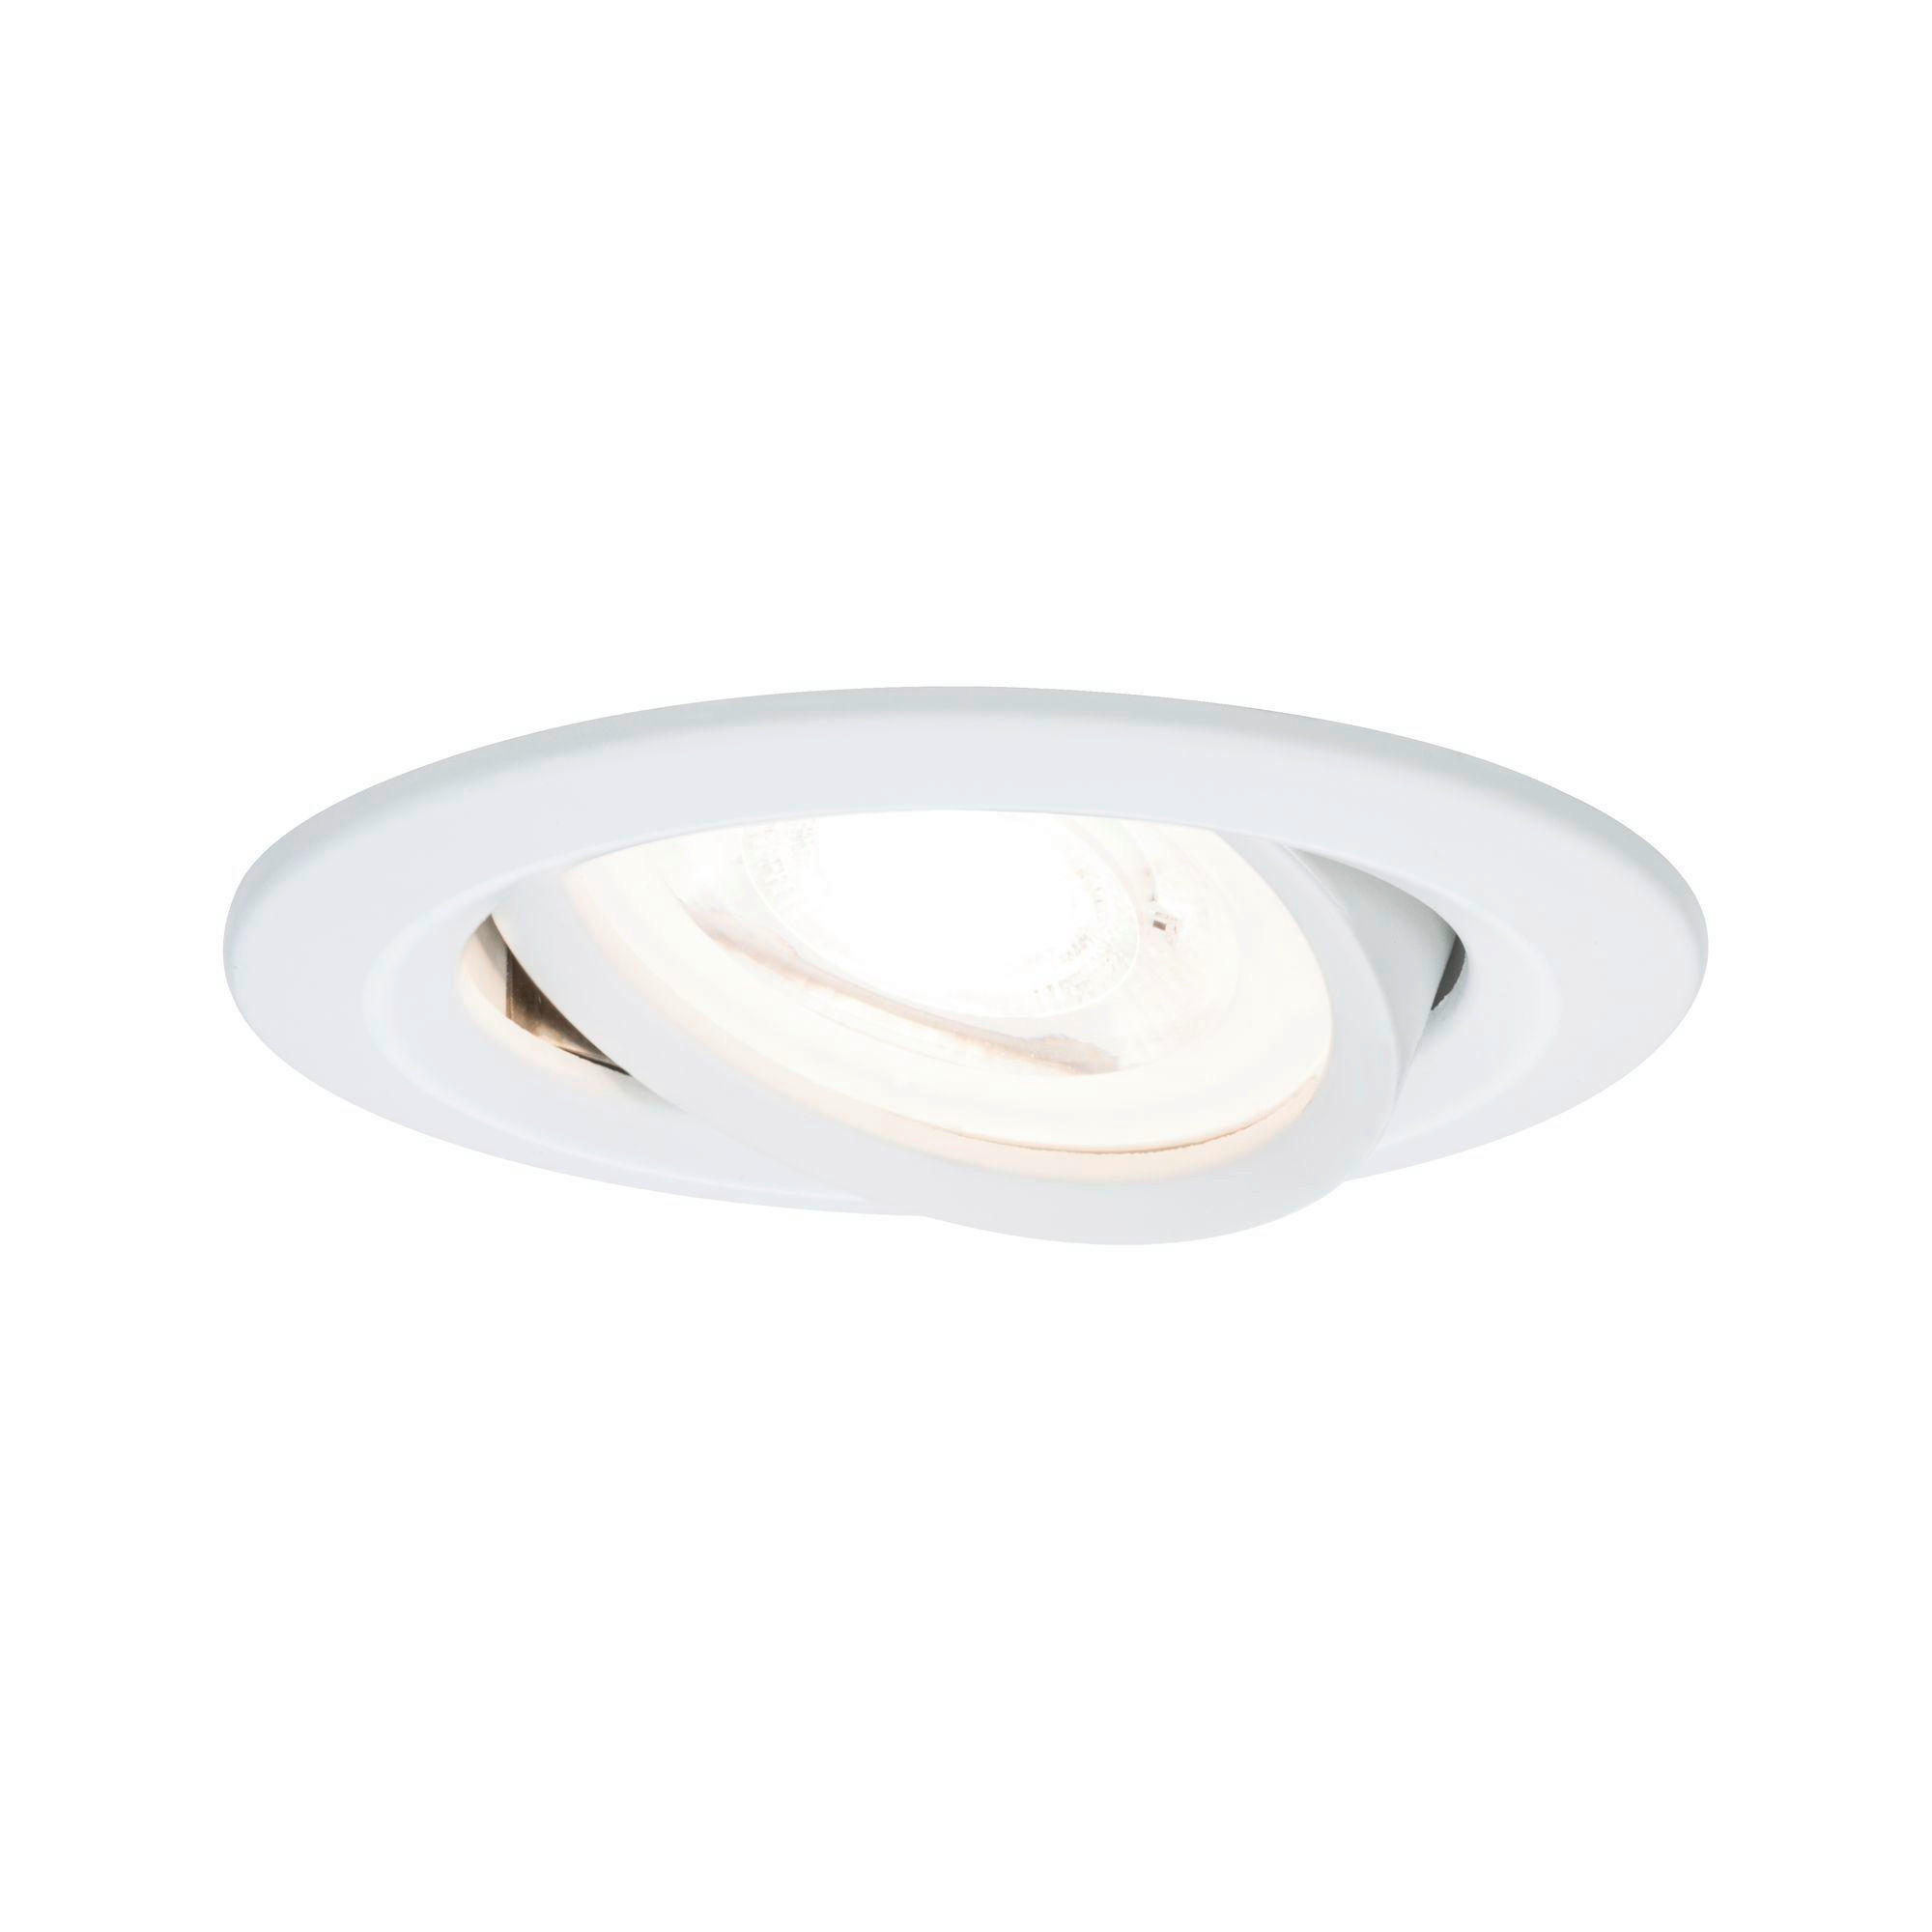 LED-SPOT Nova  - Weiß, Design, Metall (8,4cm) - Paulmann